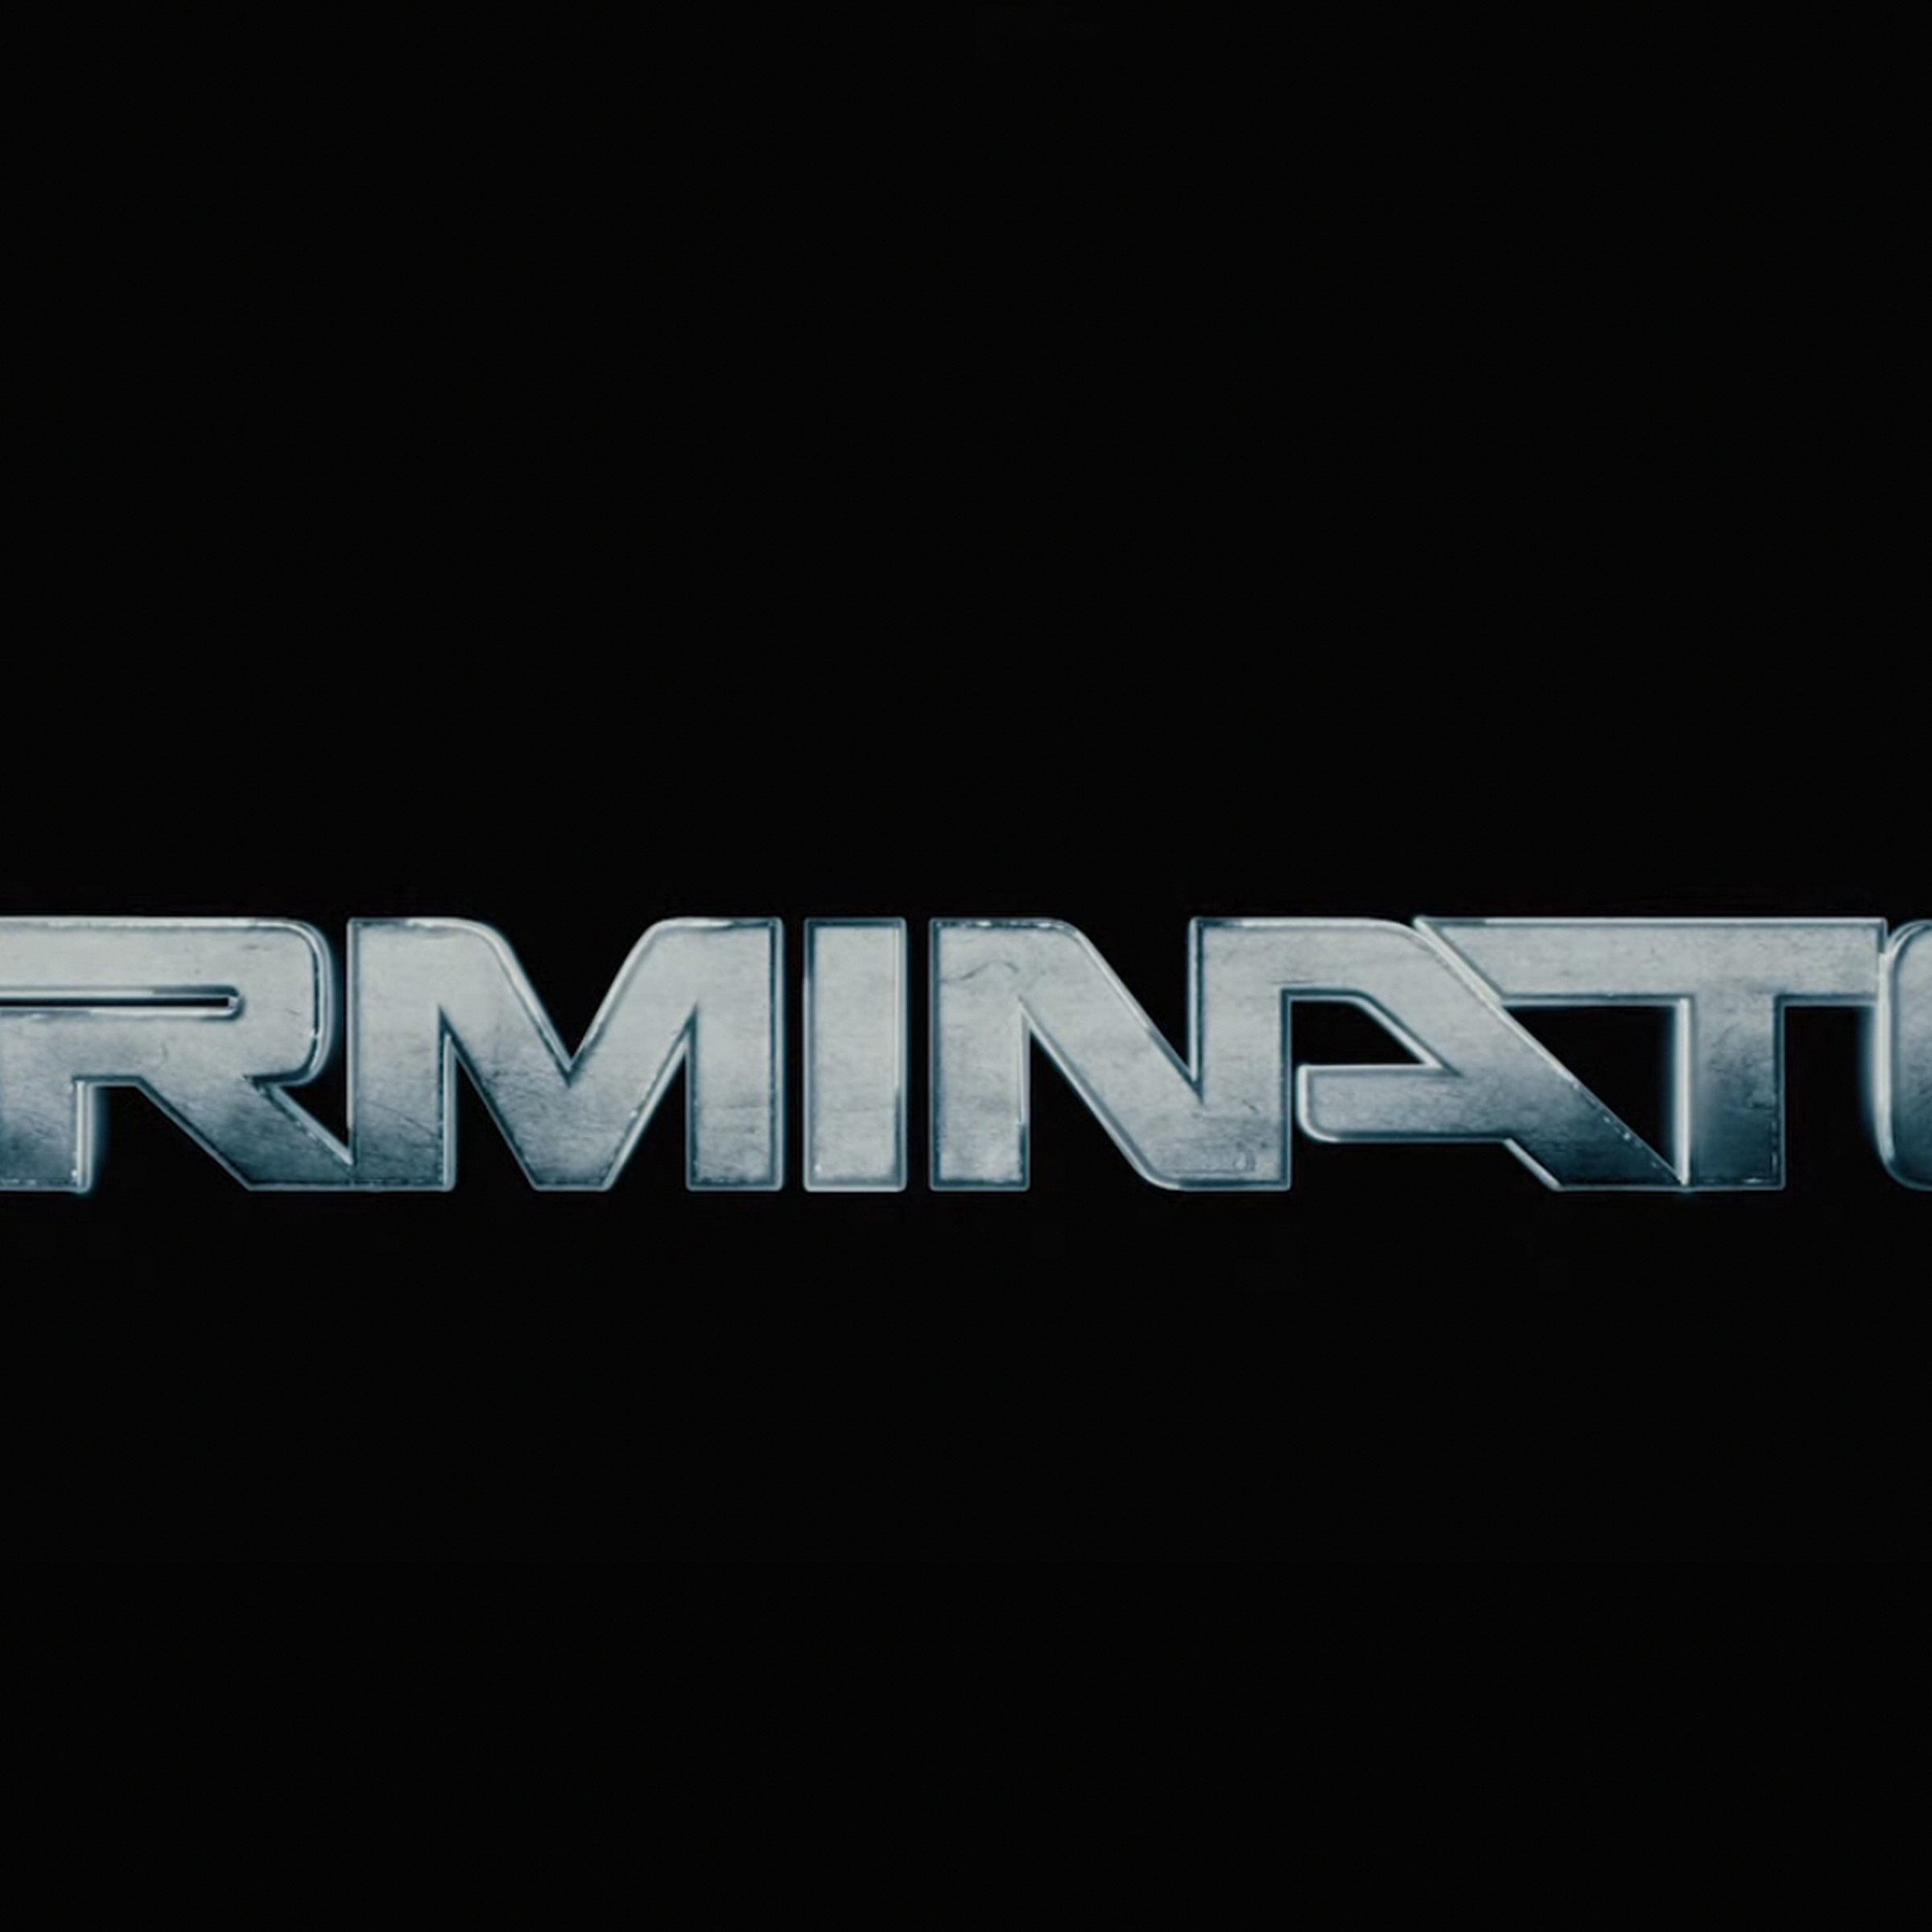 The logo for Netflix’s Terminator anime.